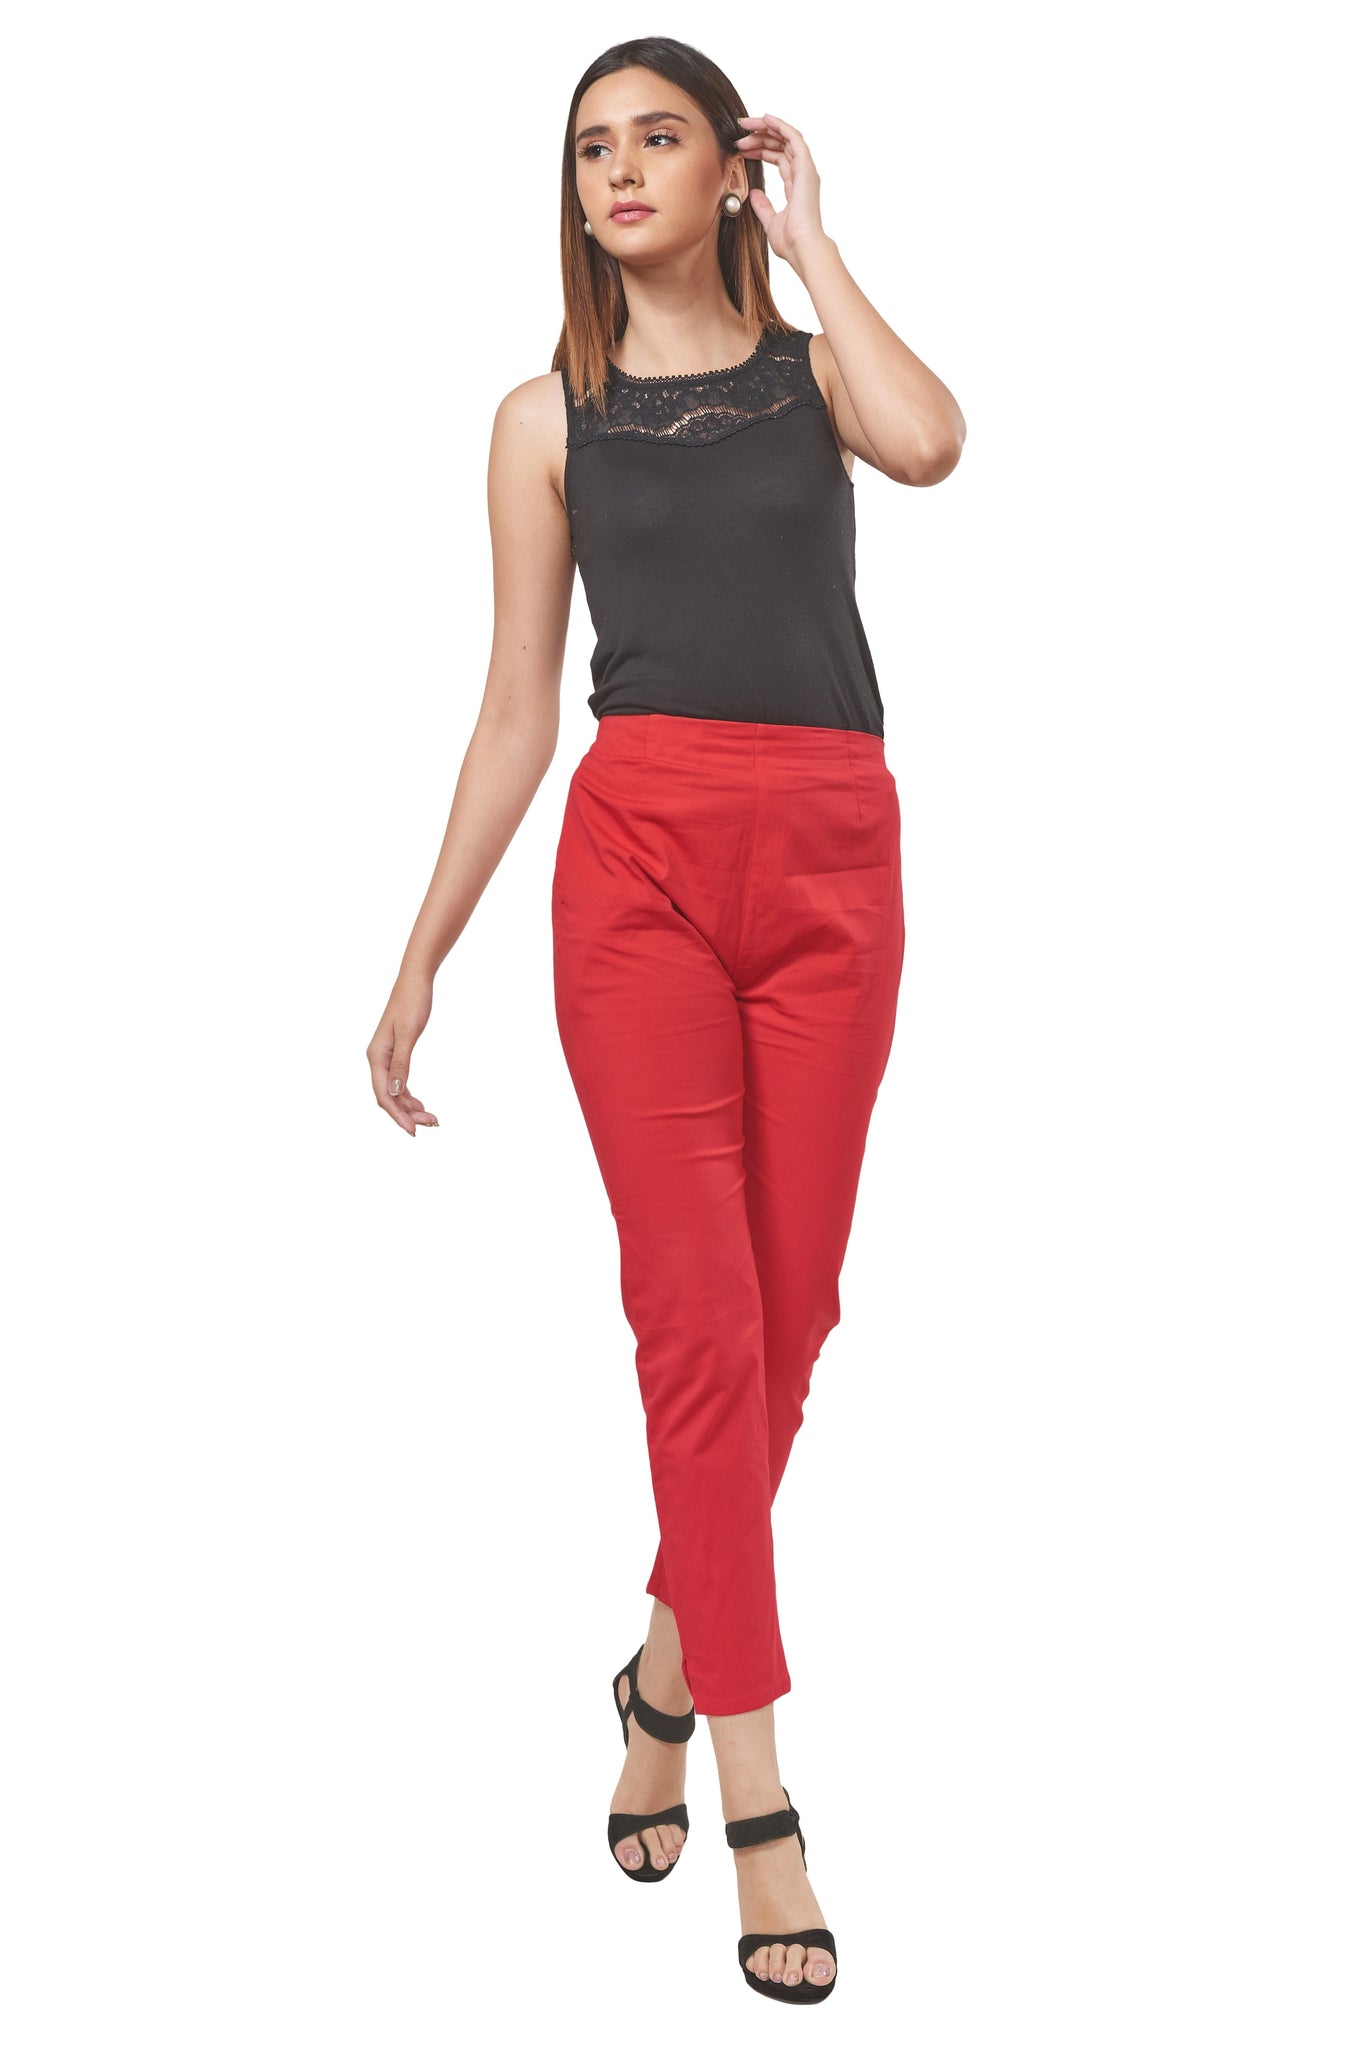 Shop Womens Solid Dark Red Mid Rise Linen Pencil Pants Online  Go Colors